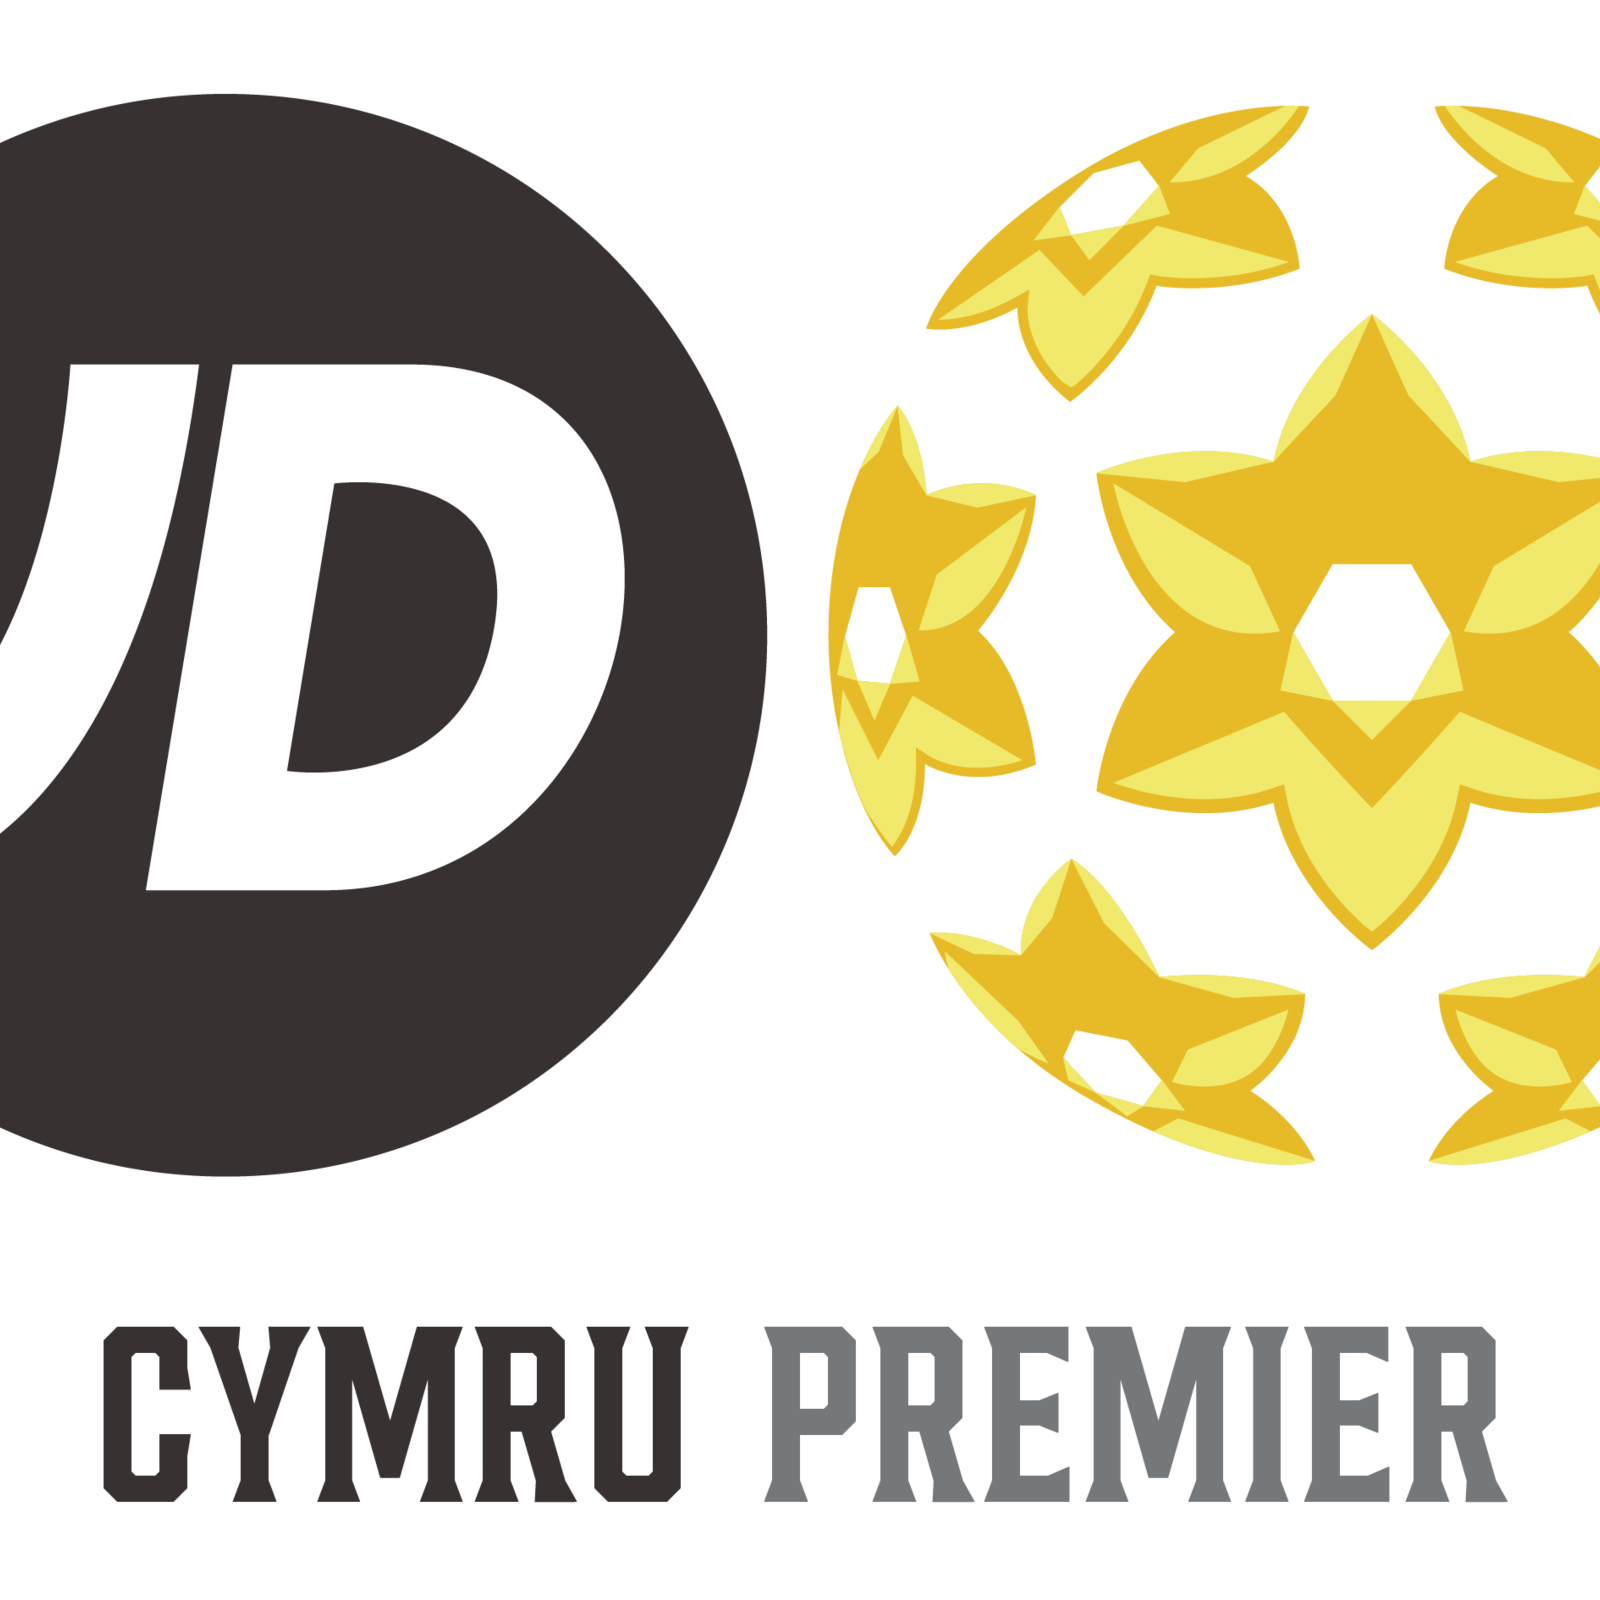 JD Cymru Premier News